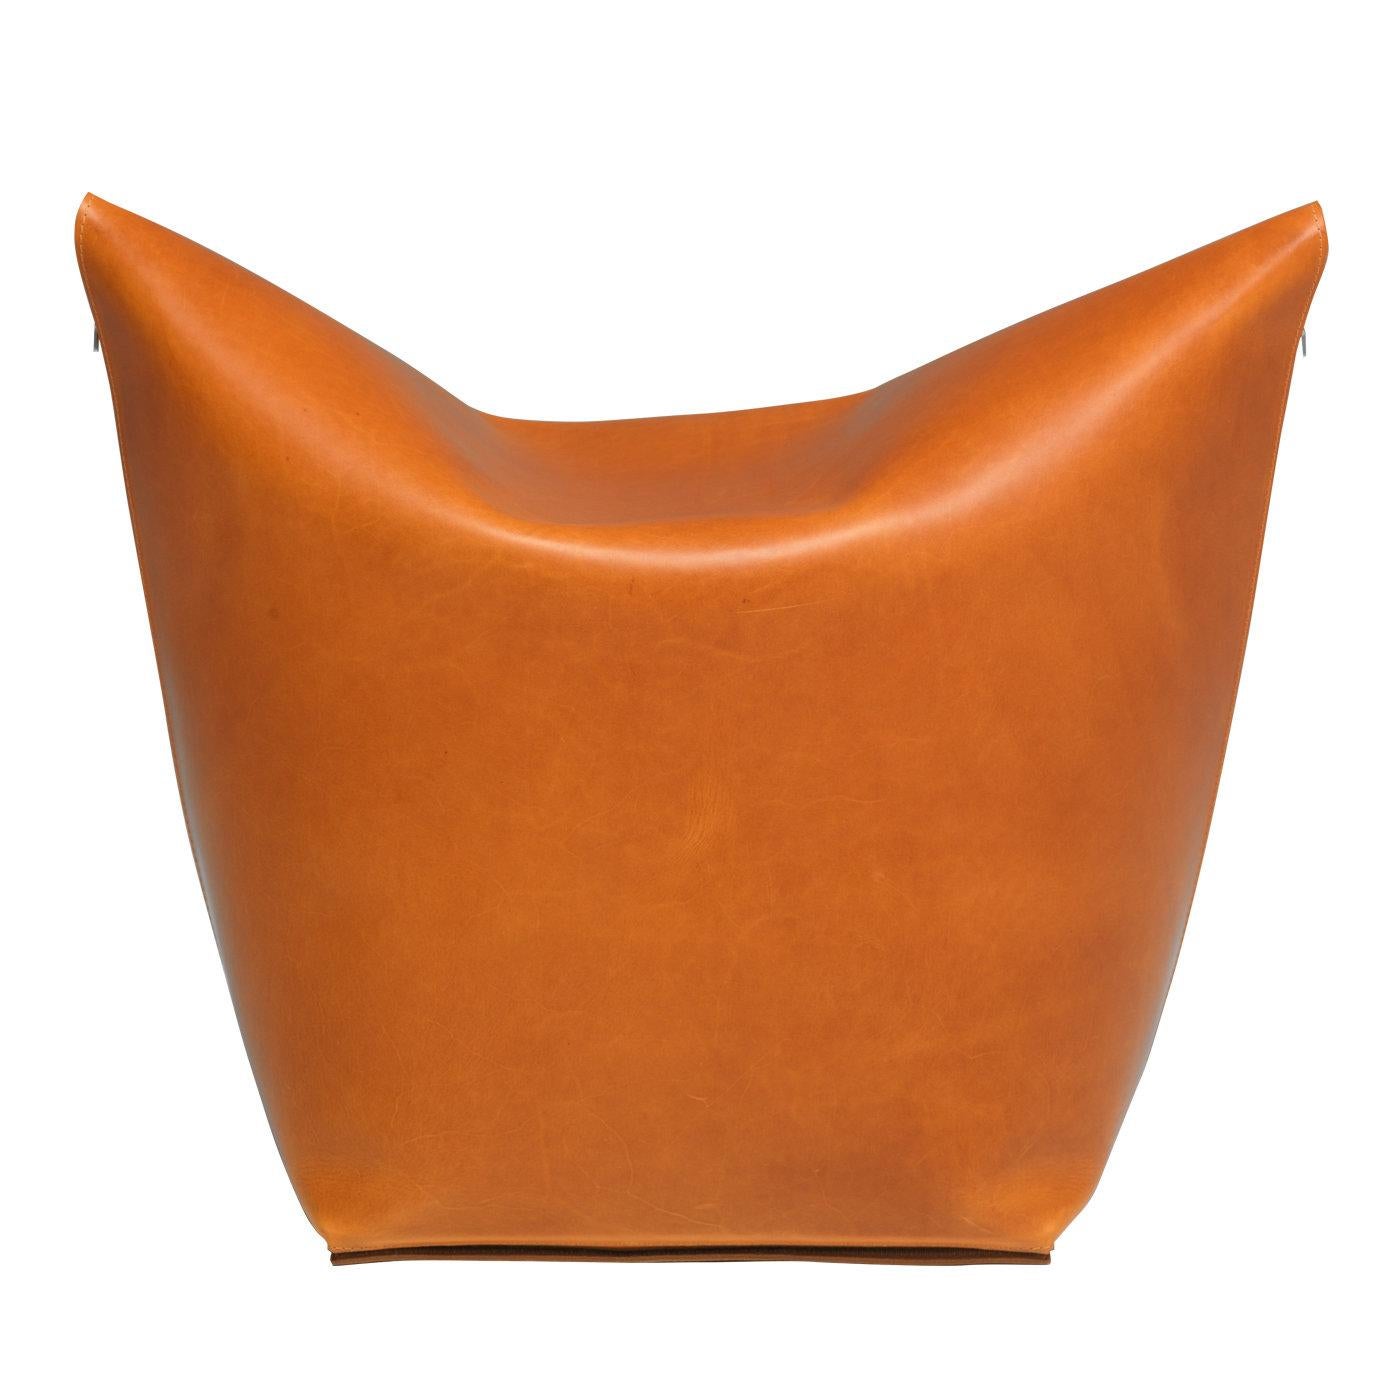 Mao Orange Leather Bag Chair by Viola Tonucci For Sale